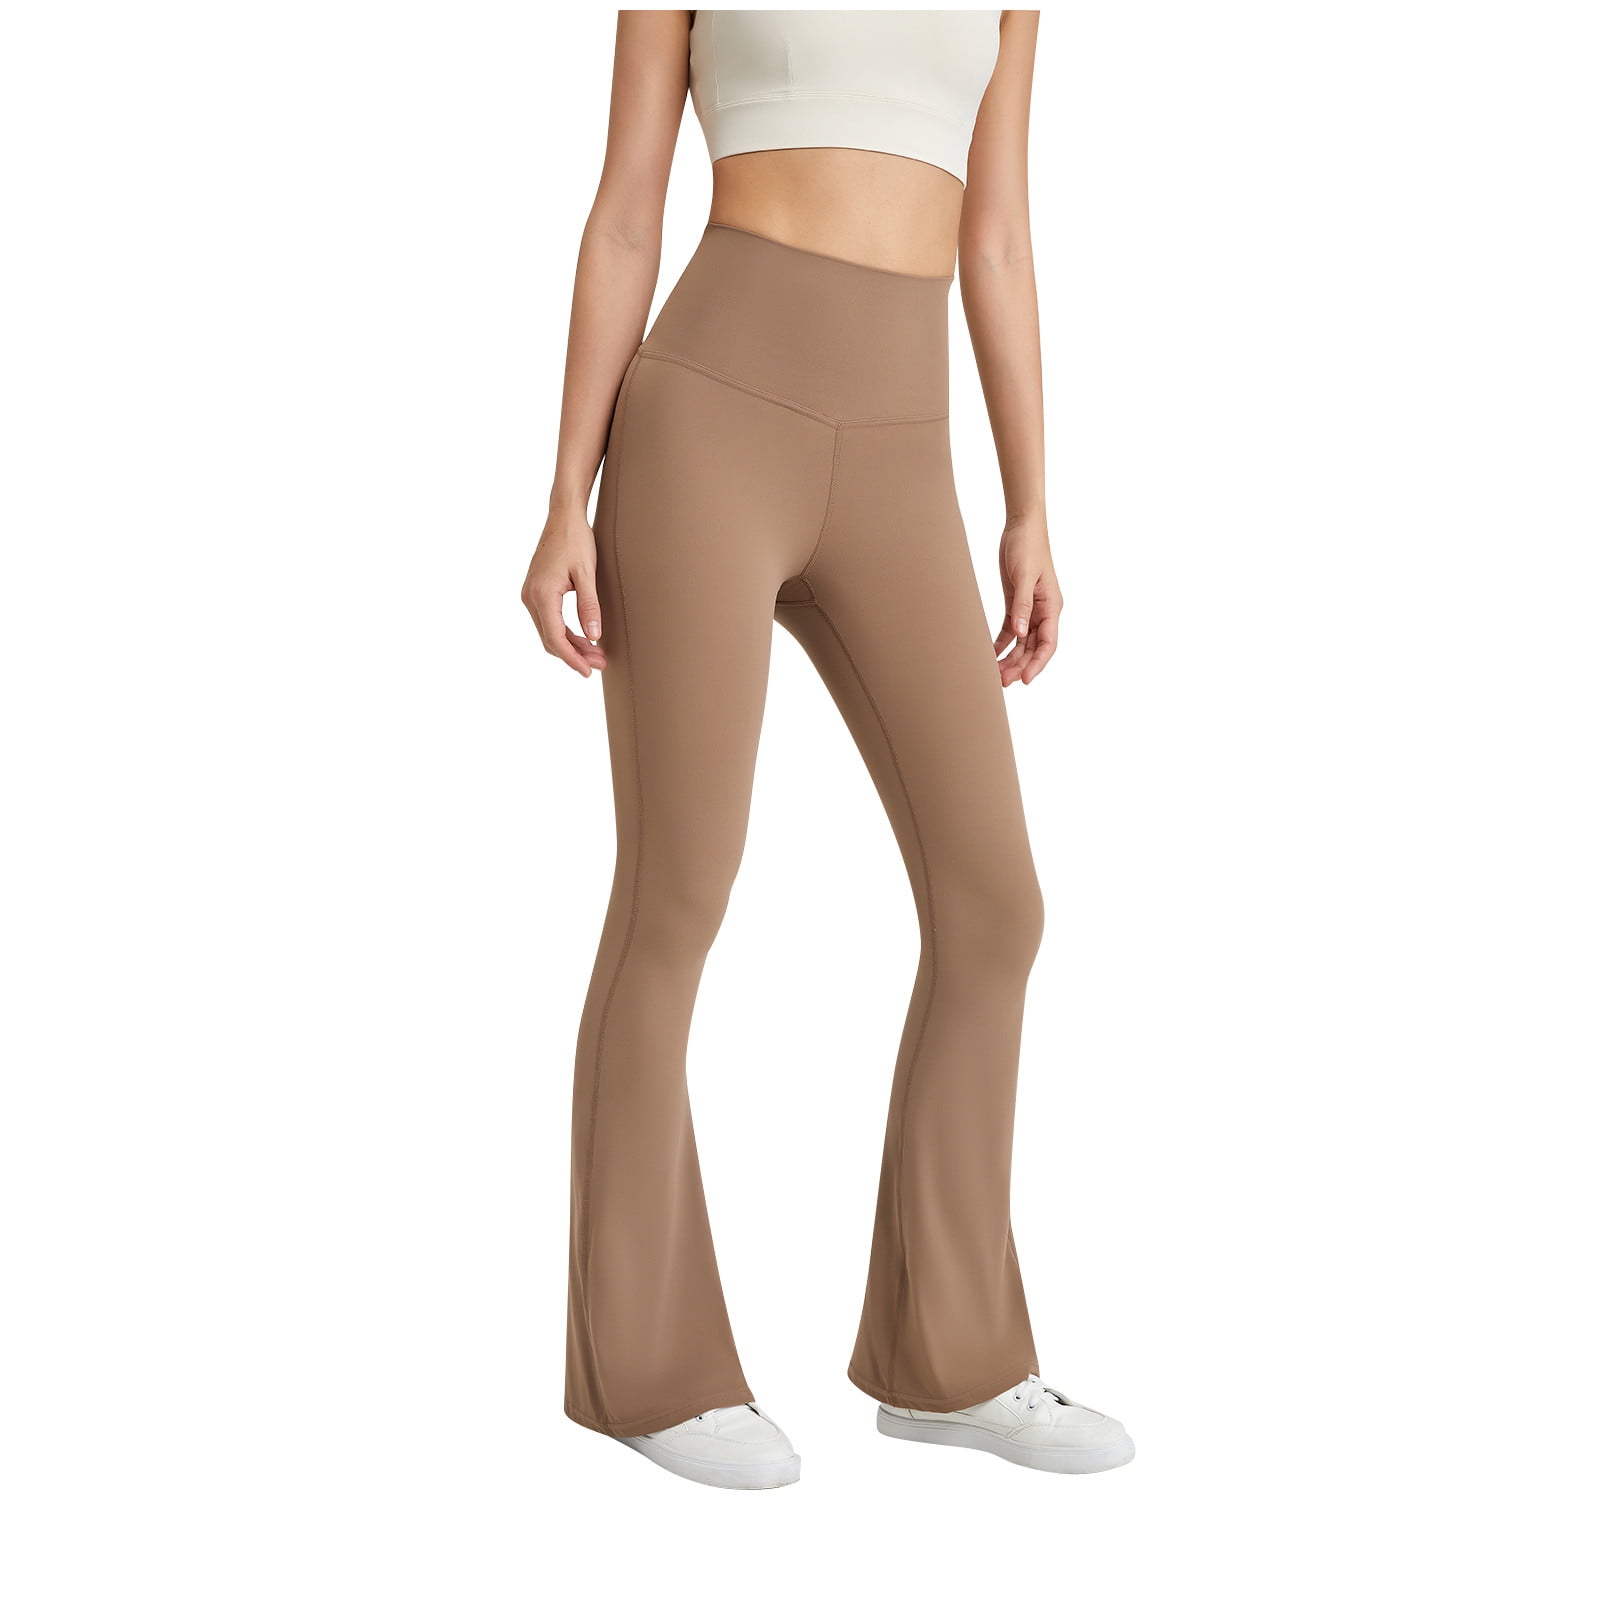 Flare Leggings for Women - Casual Soft Slim Fit Fold Over Waist